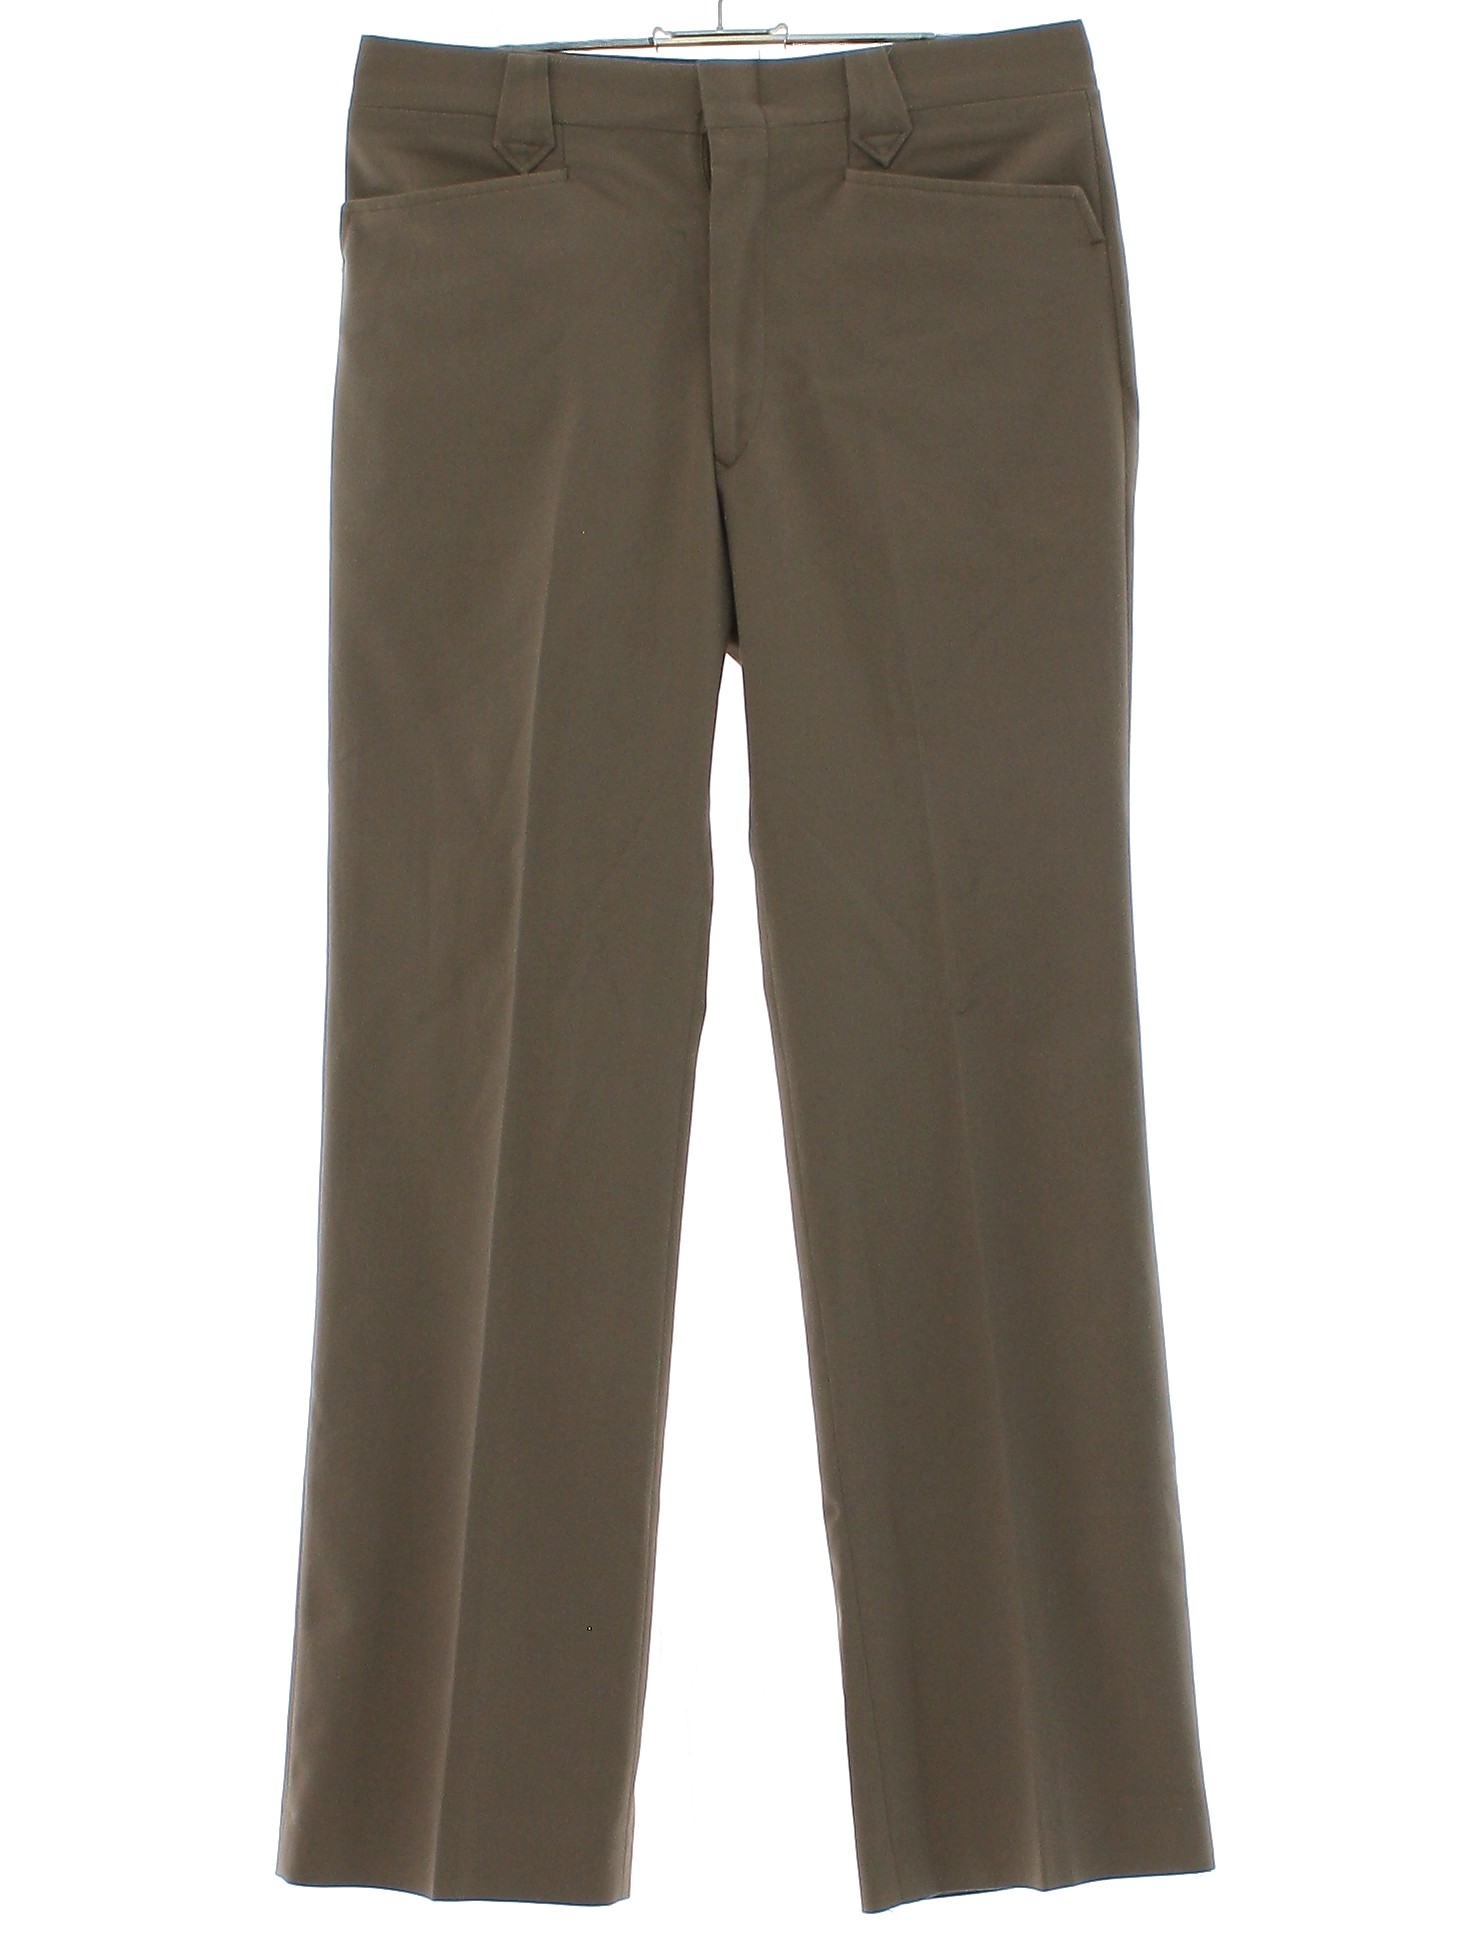 Retro 70s Pants: 70s -No Label- Mens cocoa brown solid colored ...